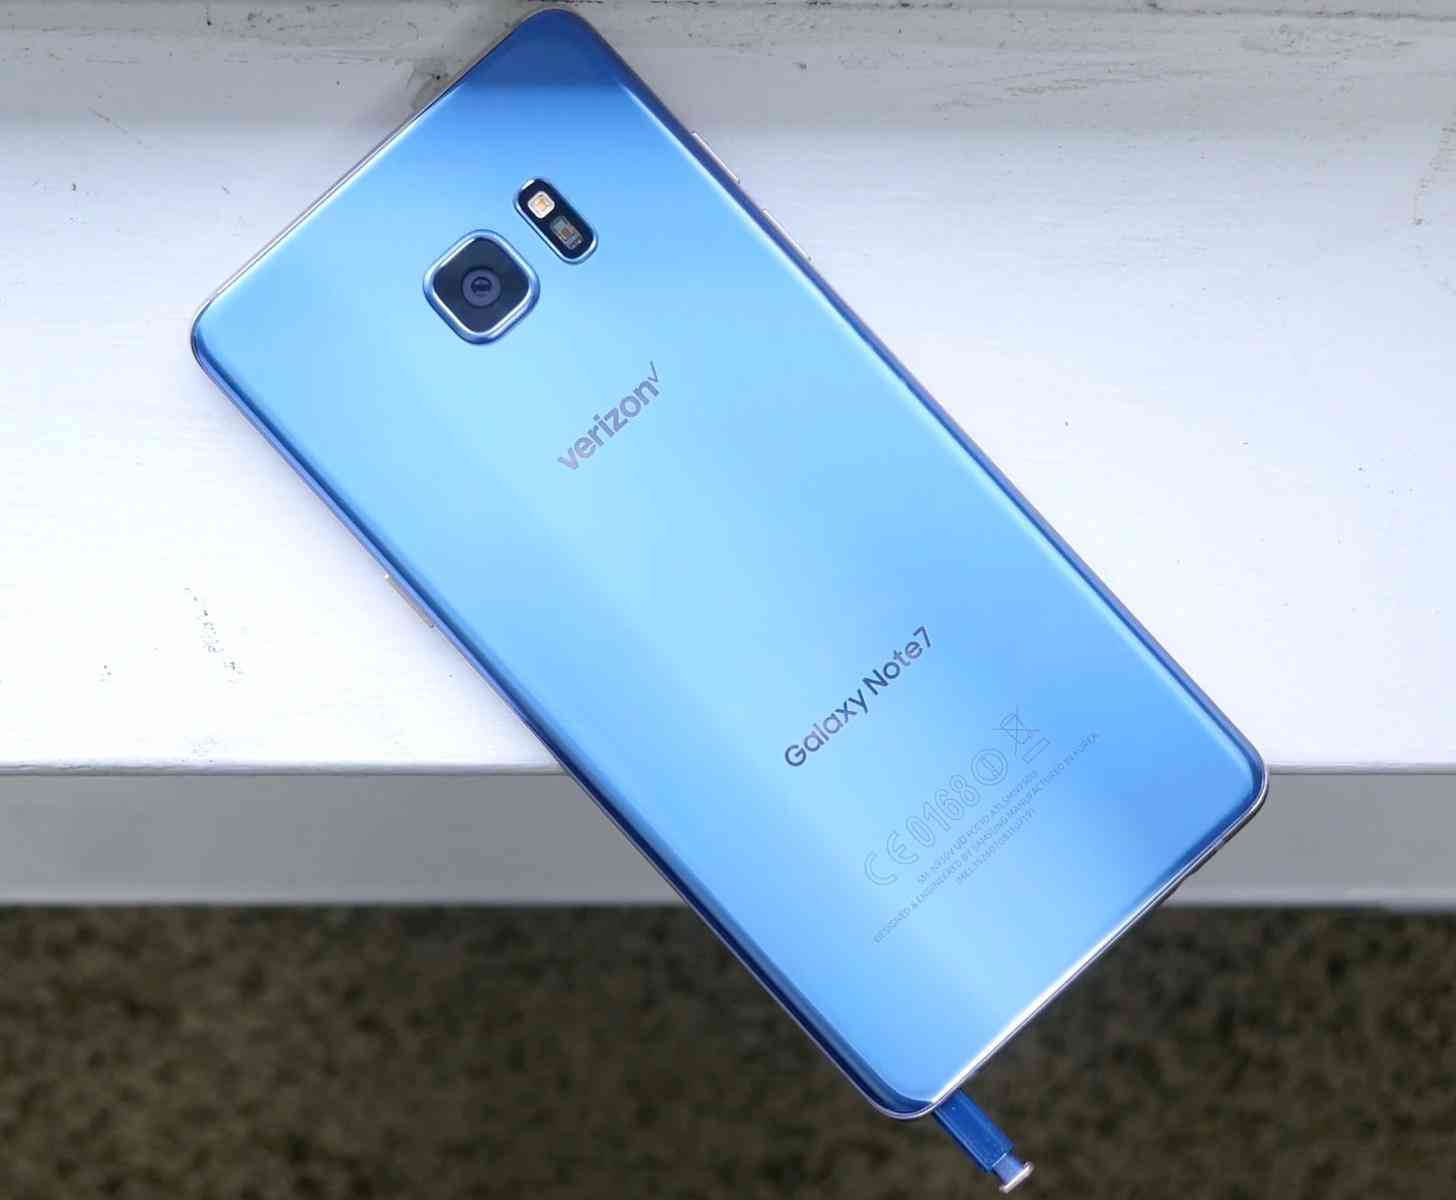 Verizon Galaxy Note 7 Blue Coral hands-on